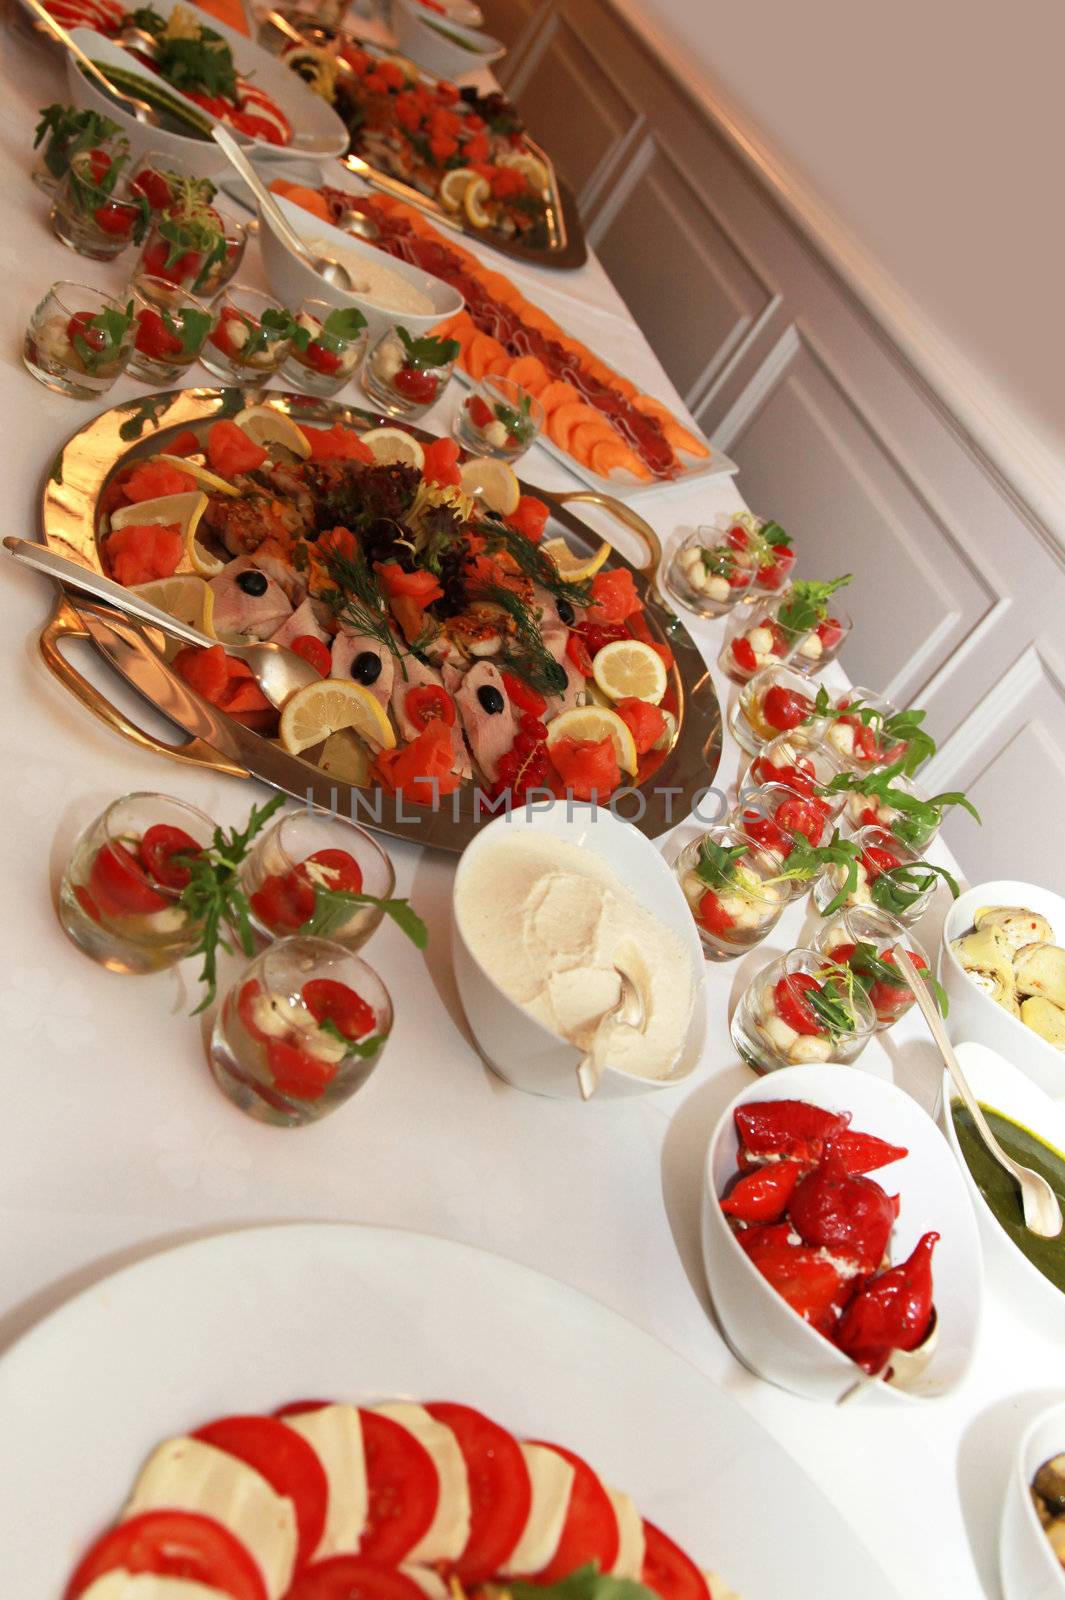 festive buffet by Farina6000